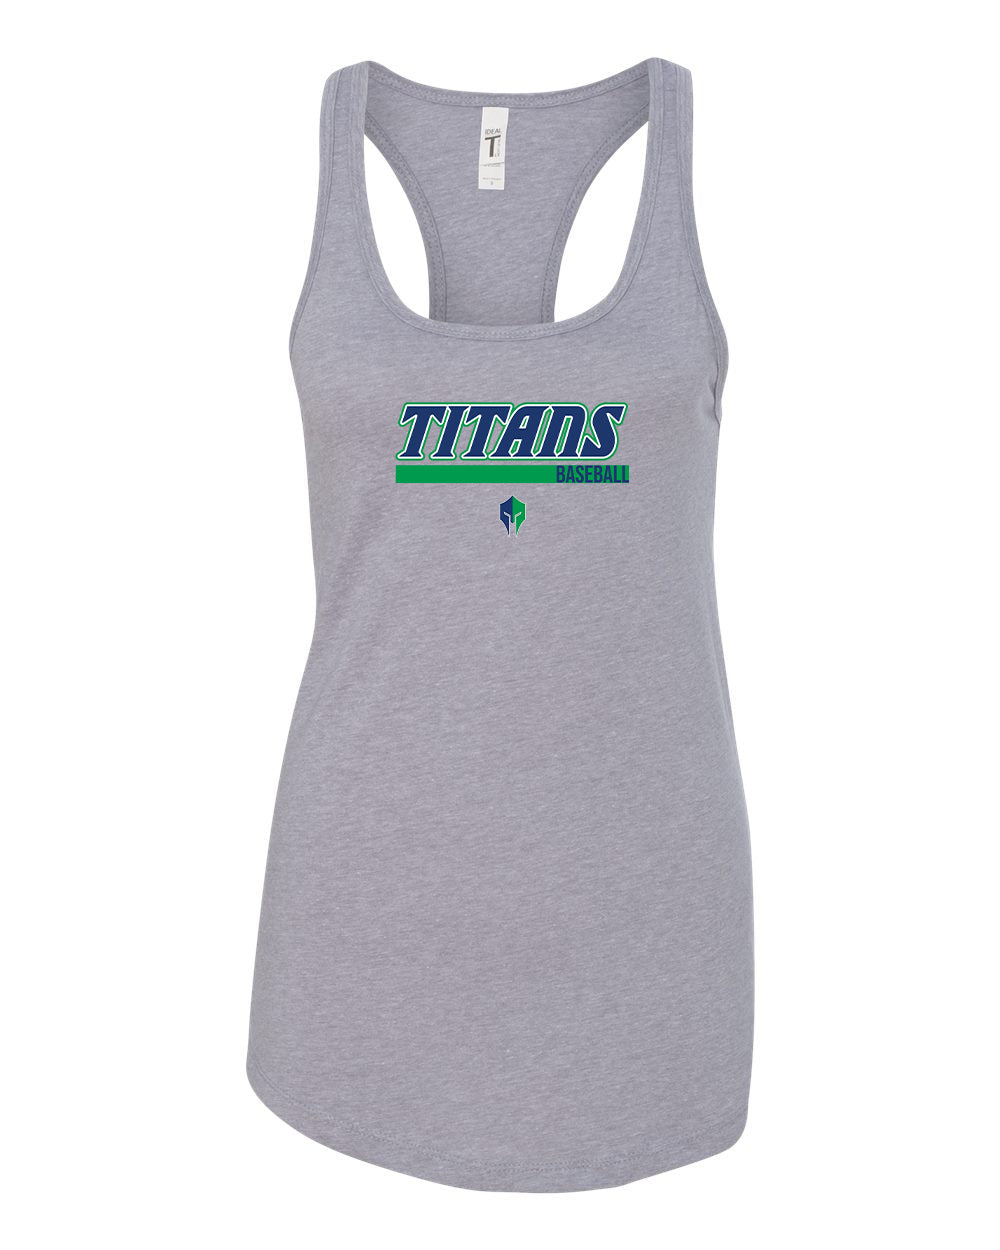 Titans Ladies Racerback Tank "Rectangle" - 1533 (color options available)